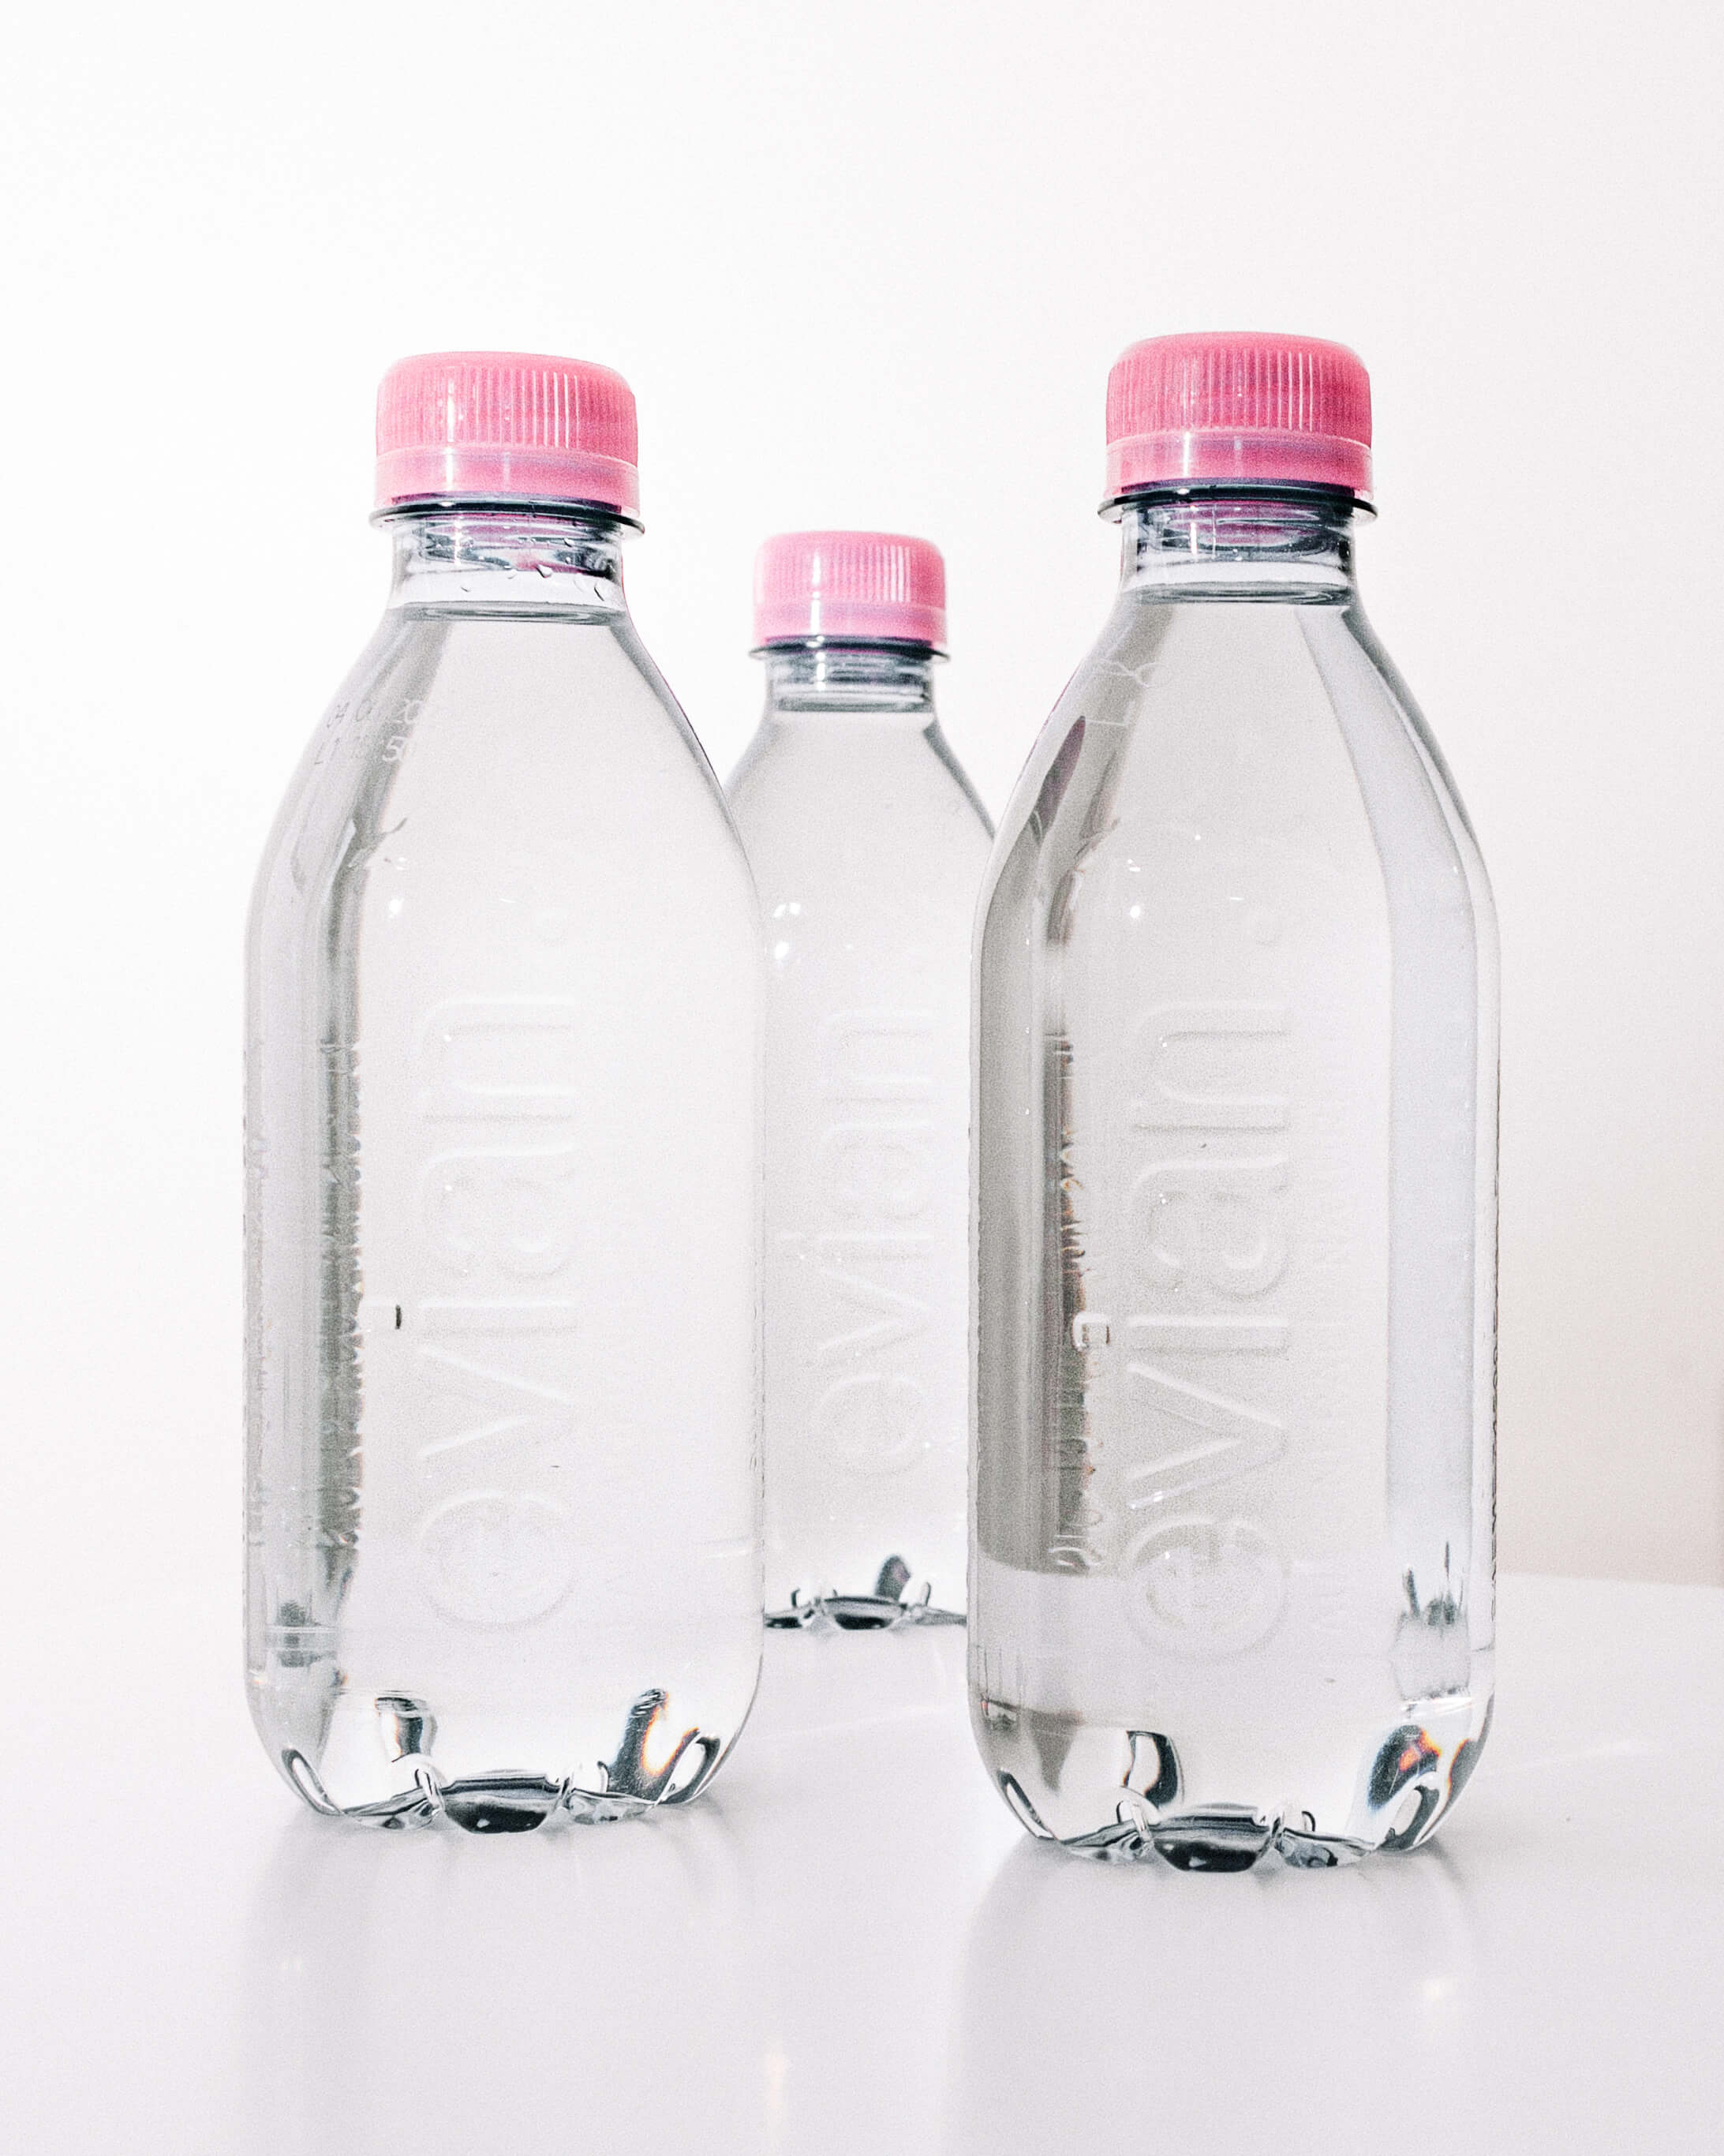 Plastic Water Bottles - Sustainability